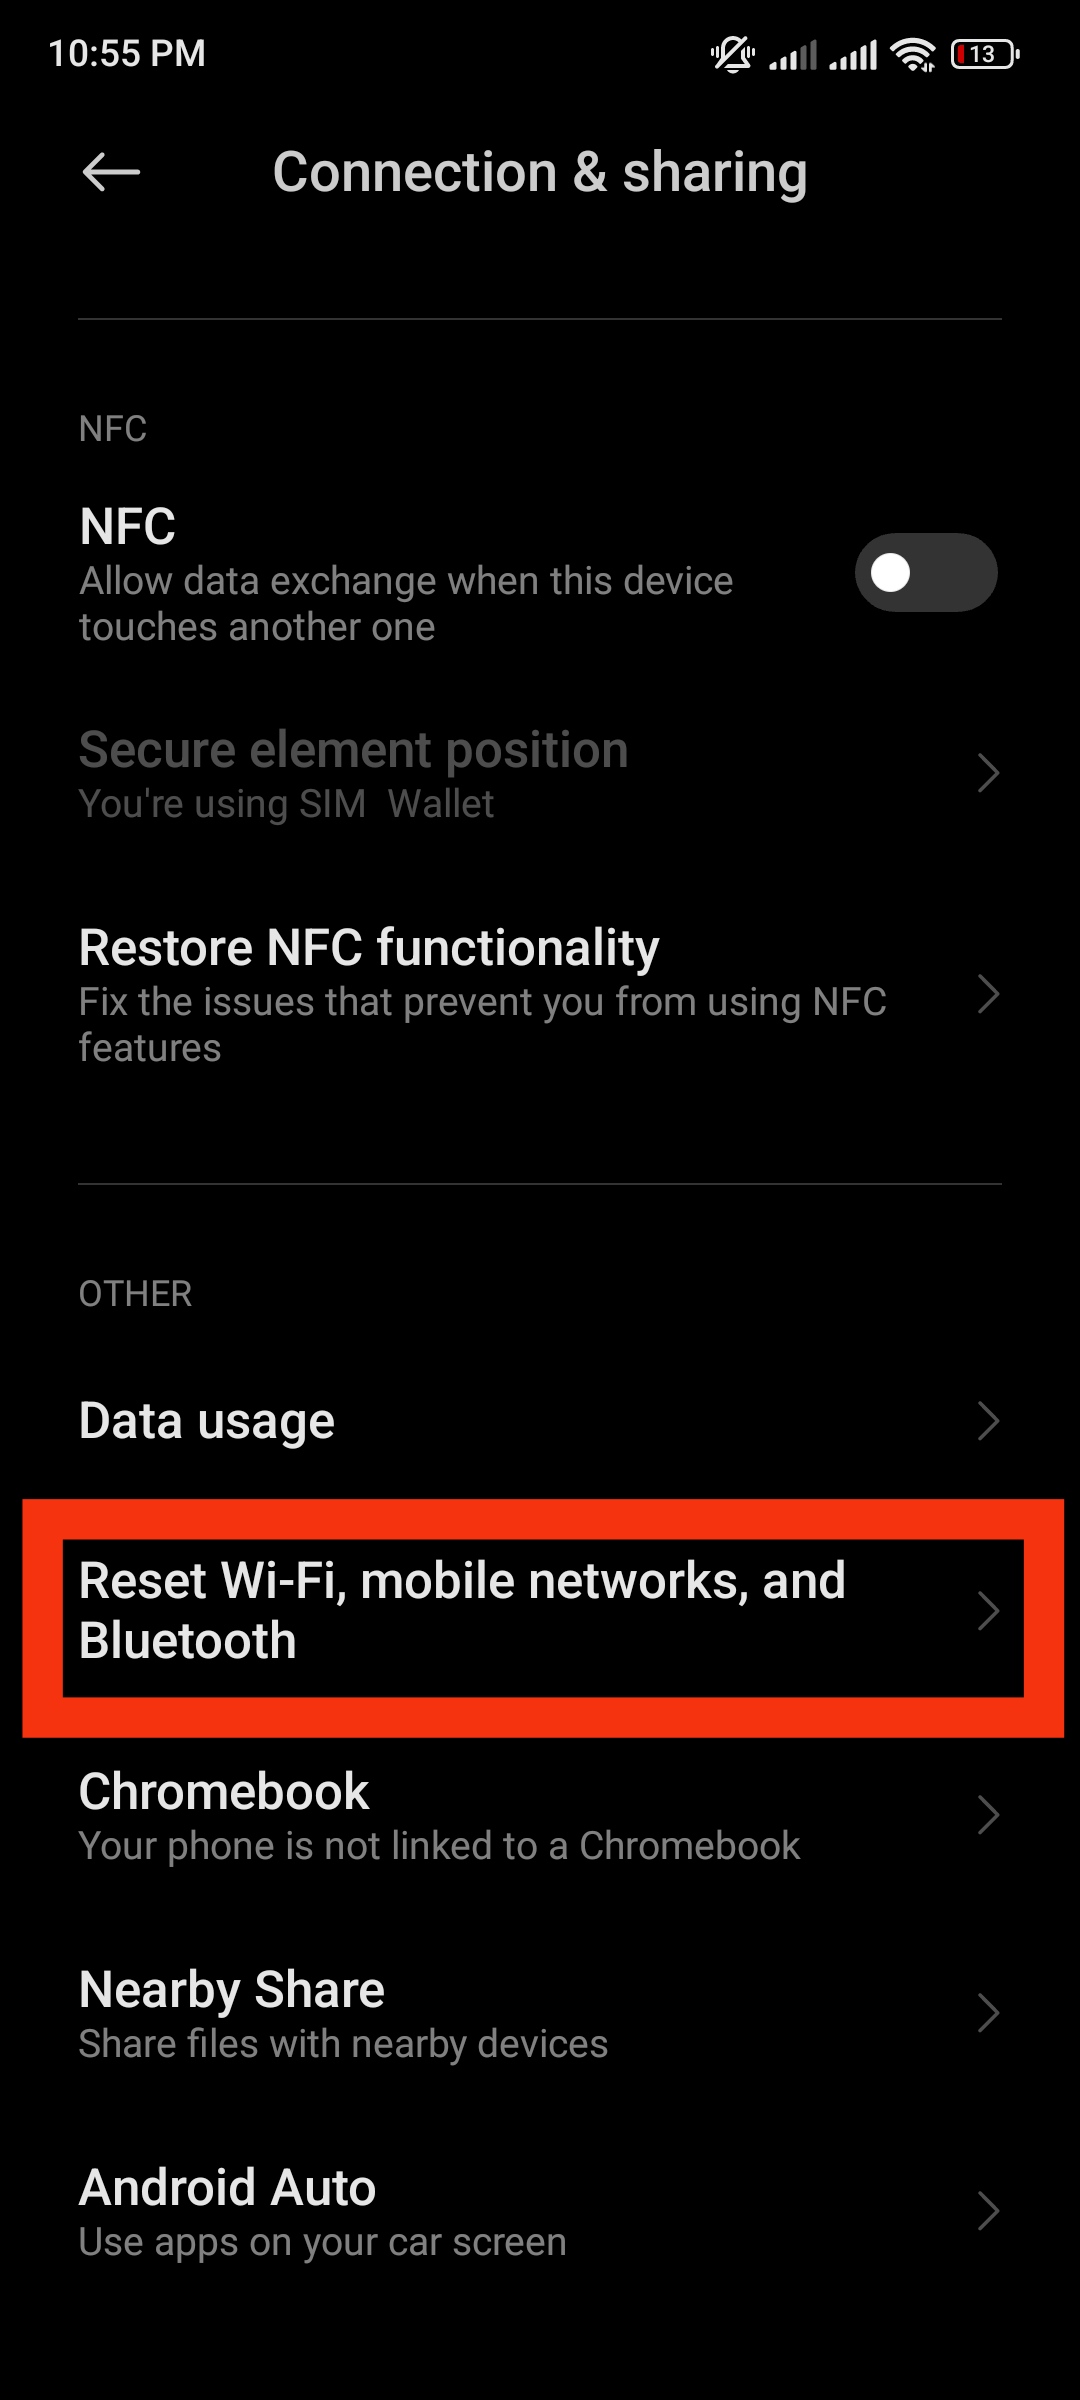 گزینه Reset Wi-Fi mobile networks and Bluetooth